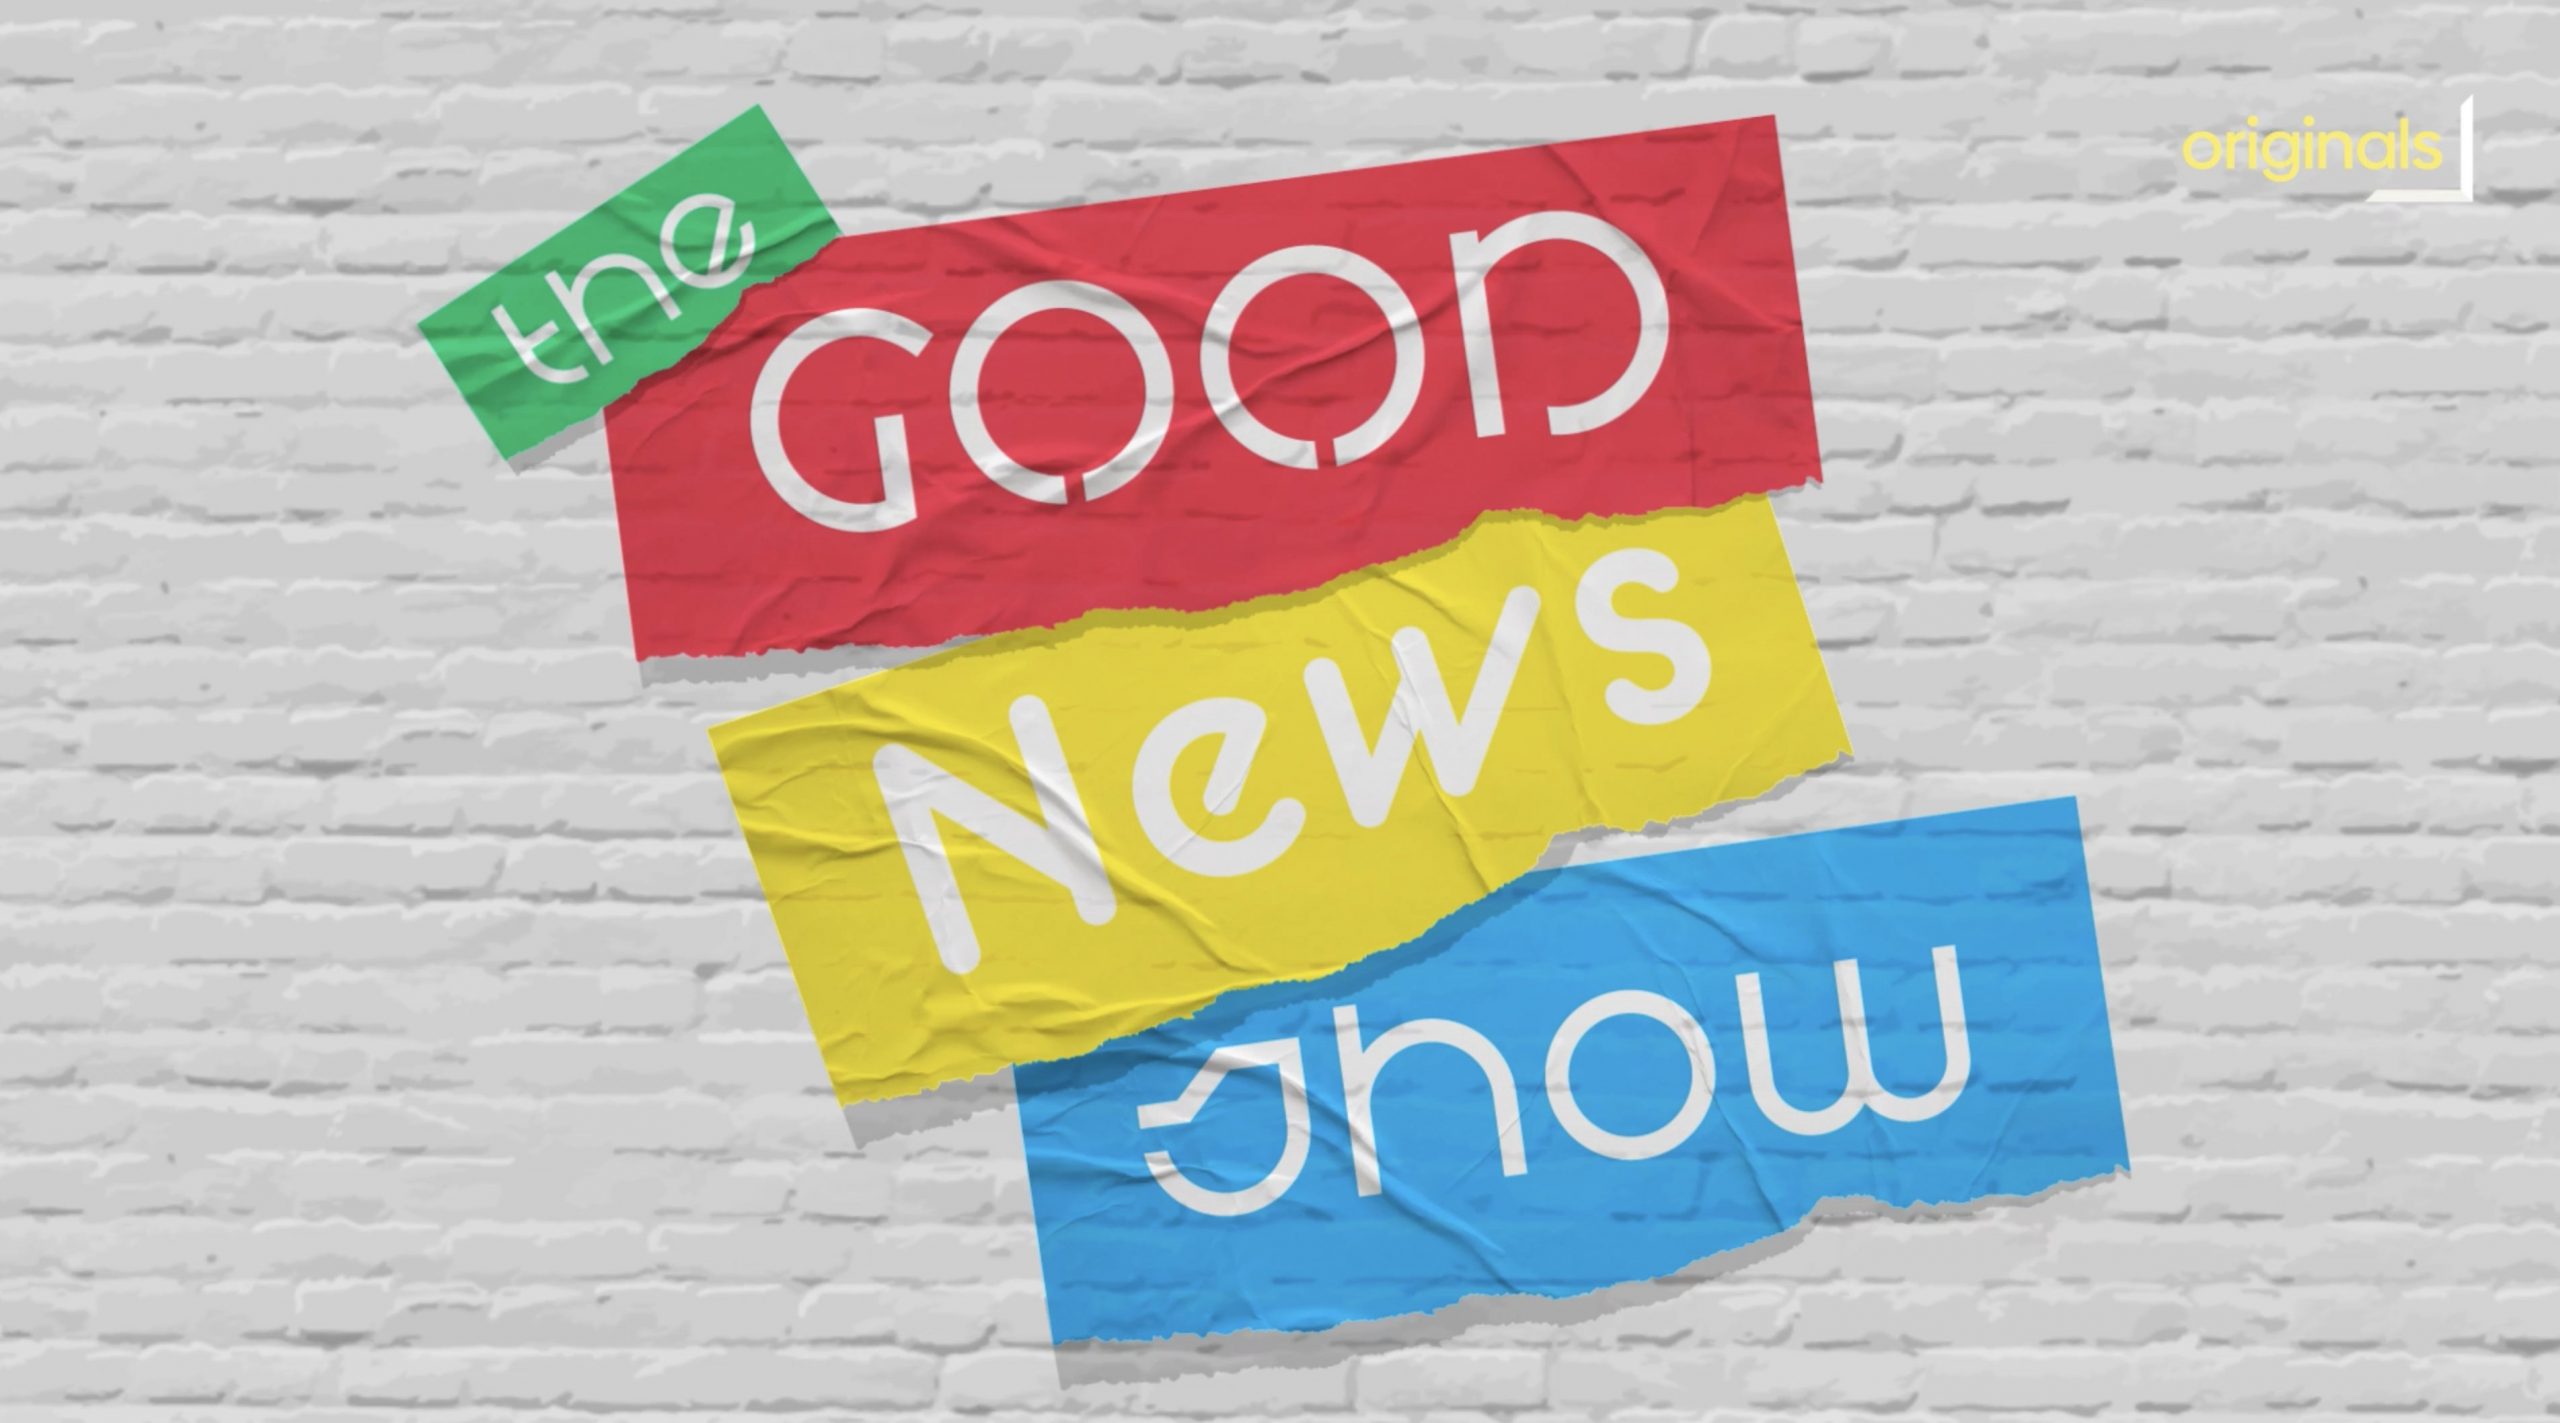 The Good News Show